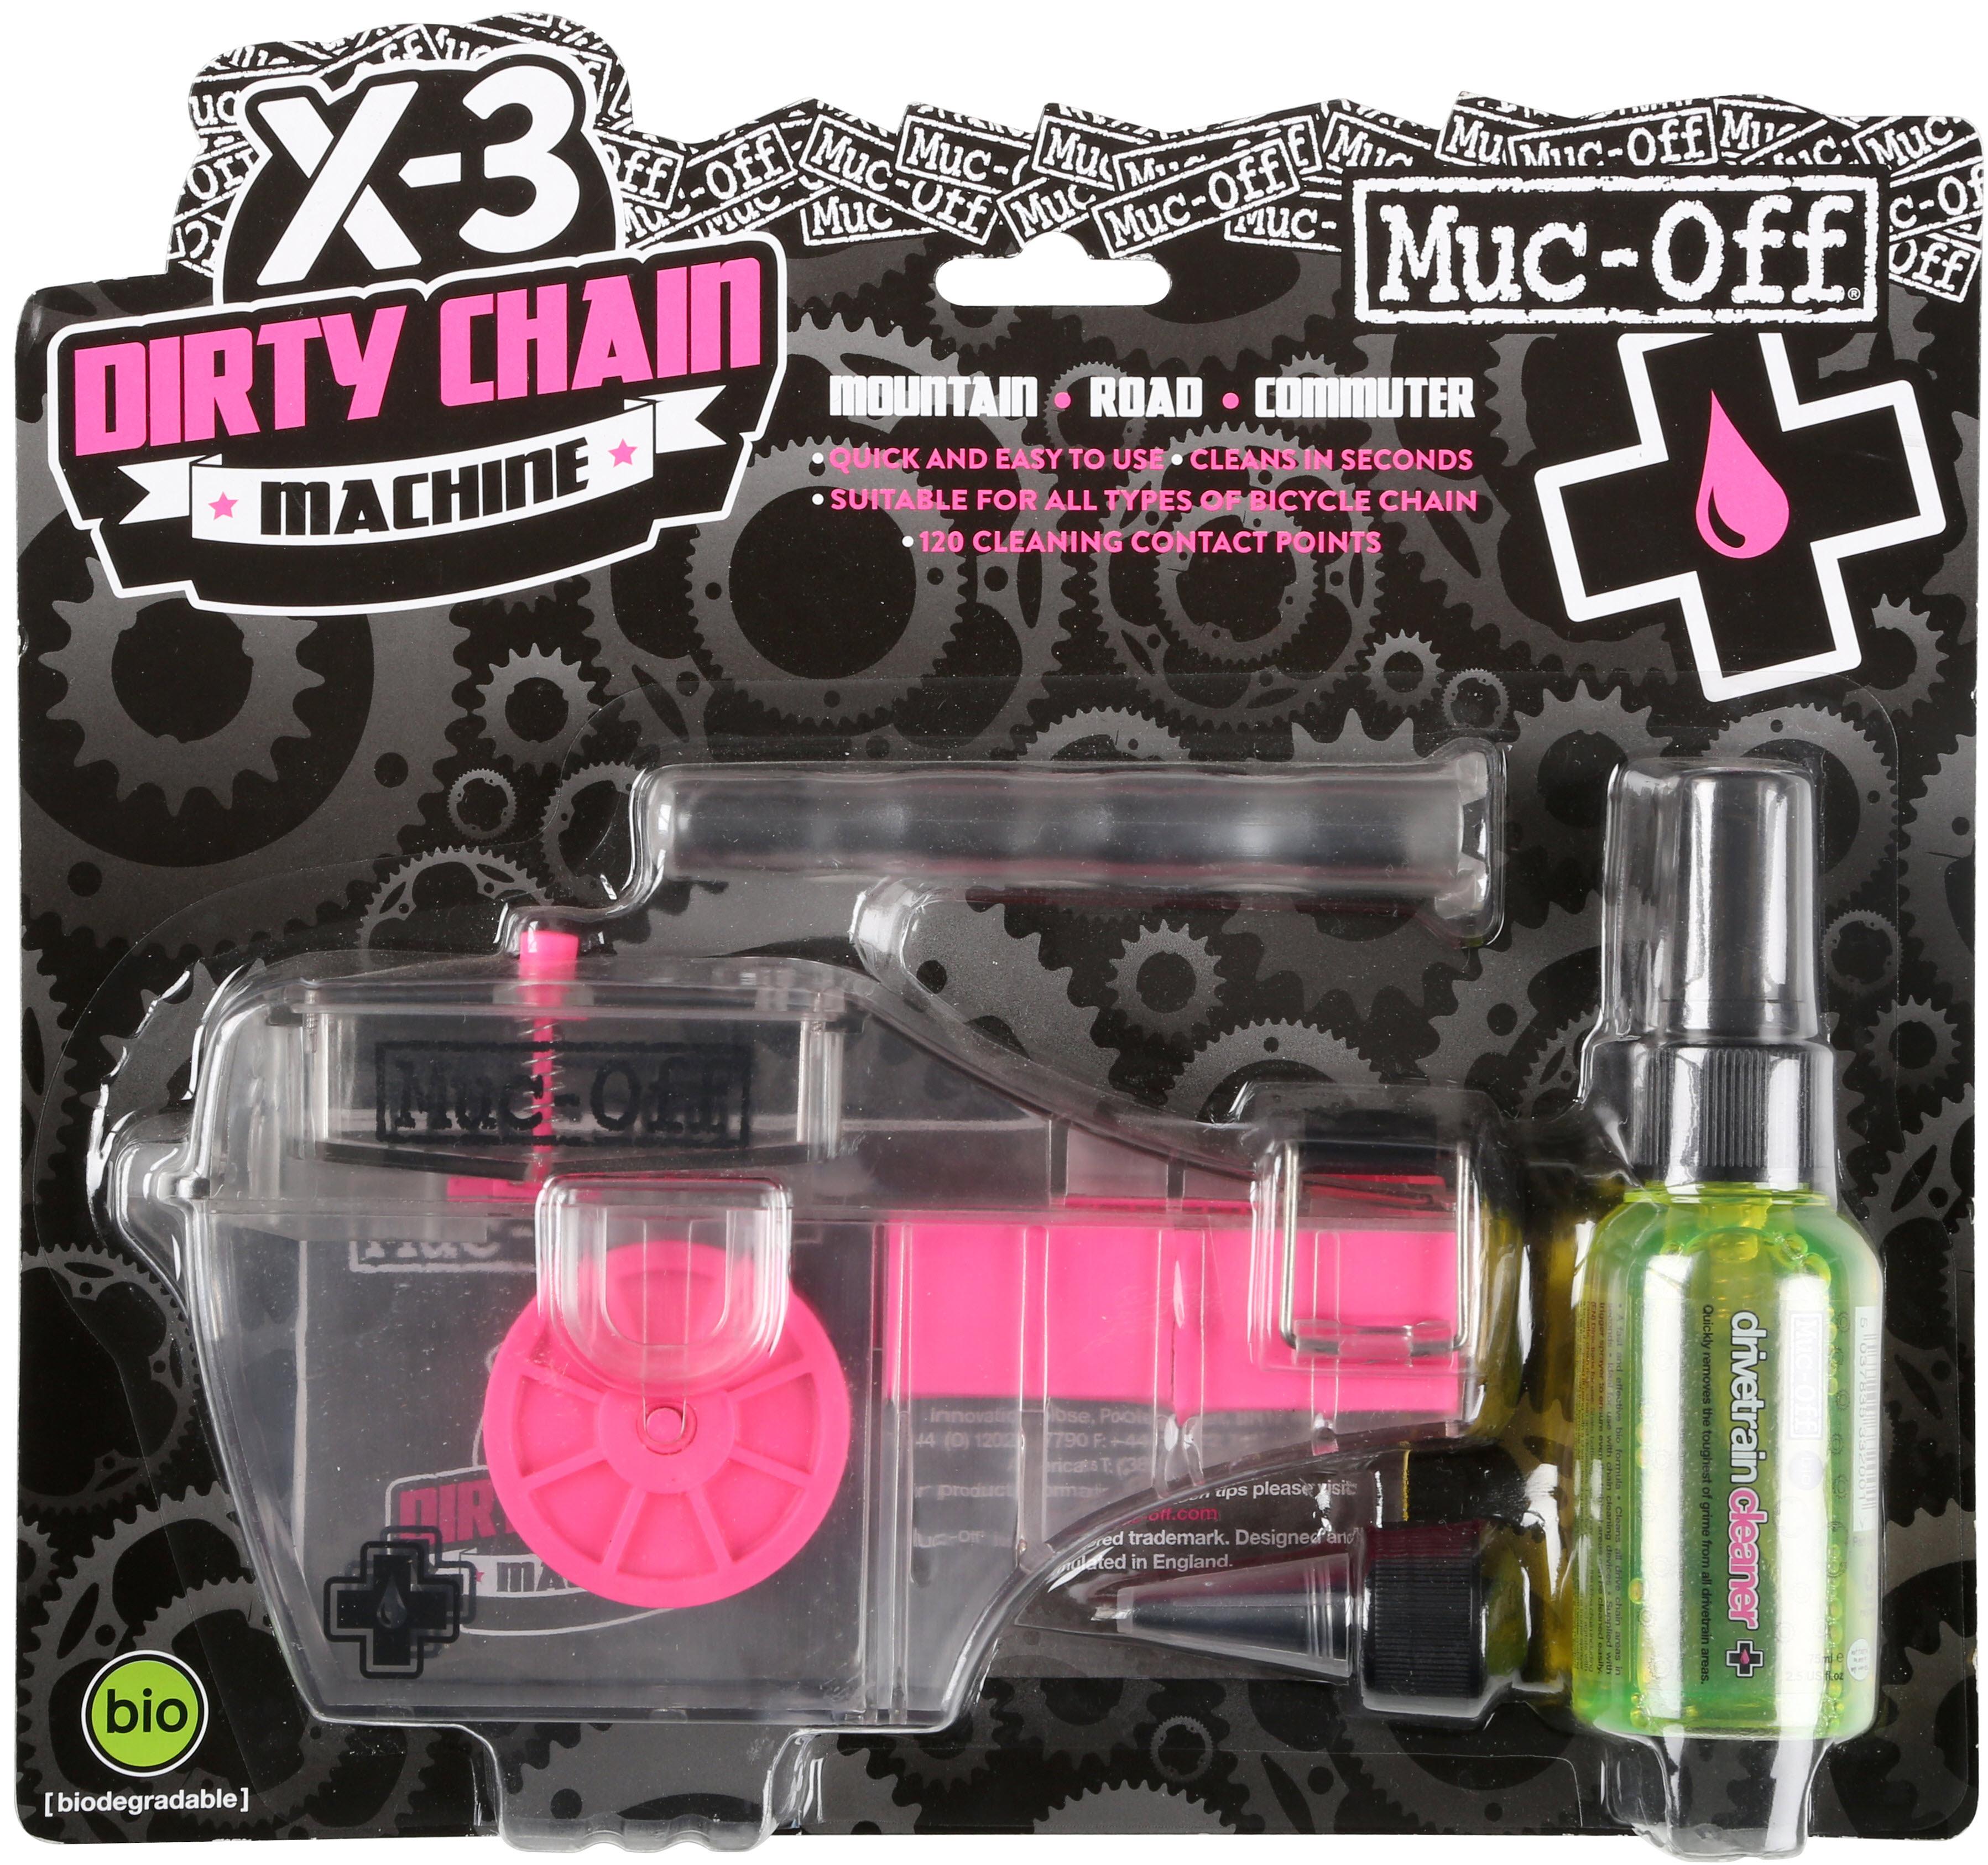 Muc-Off X3 Dirty Chain Machine Halfords UK